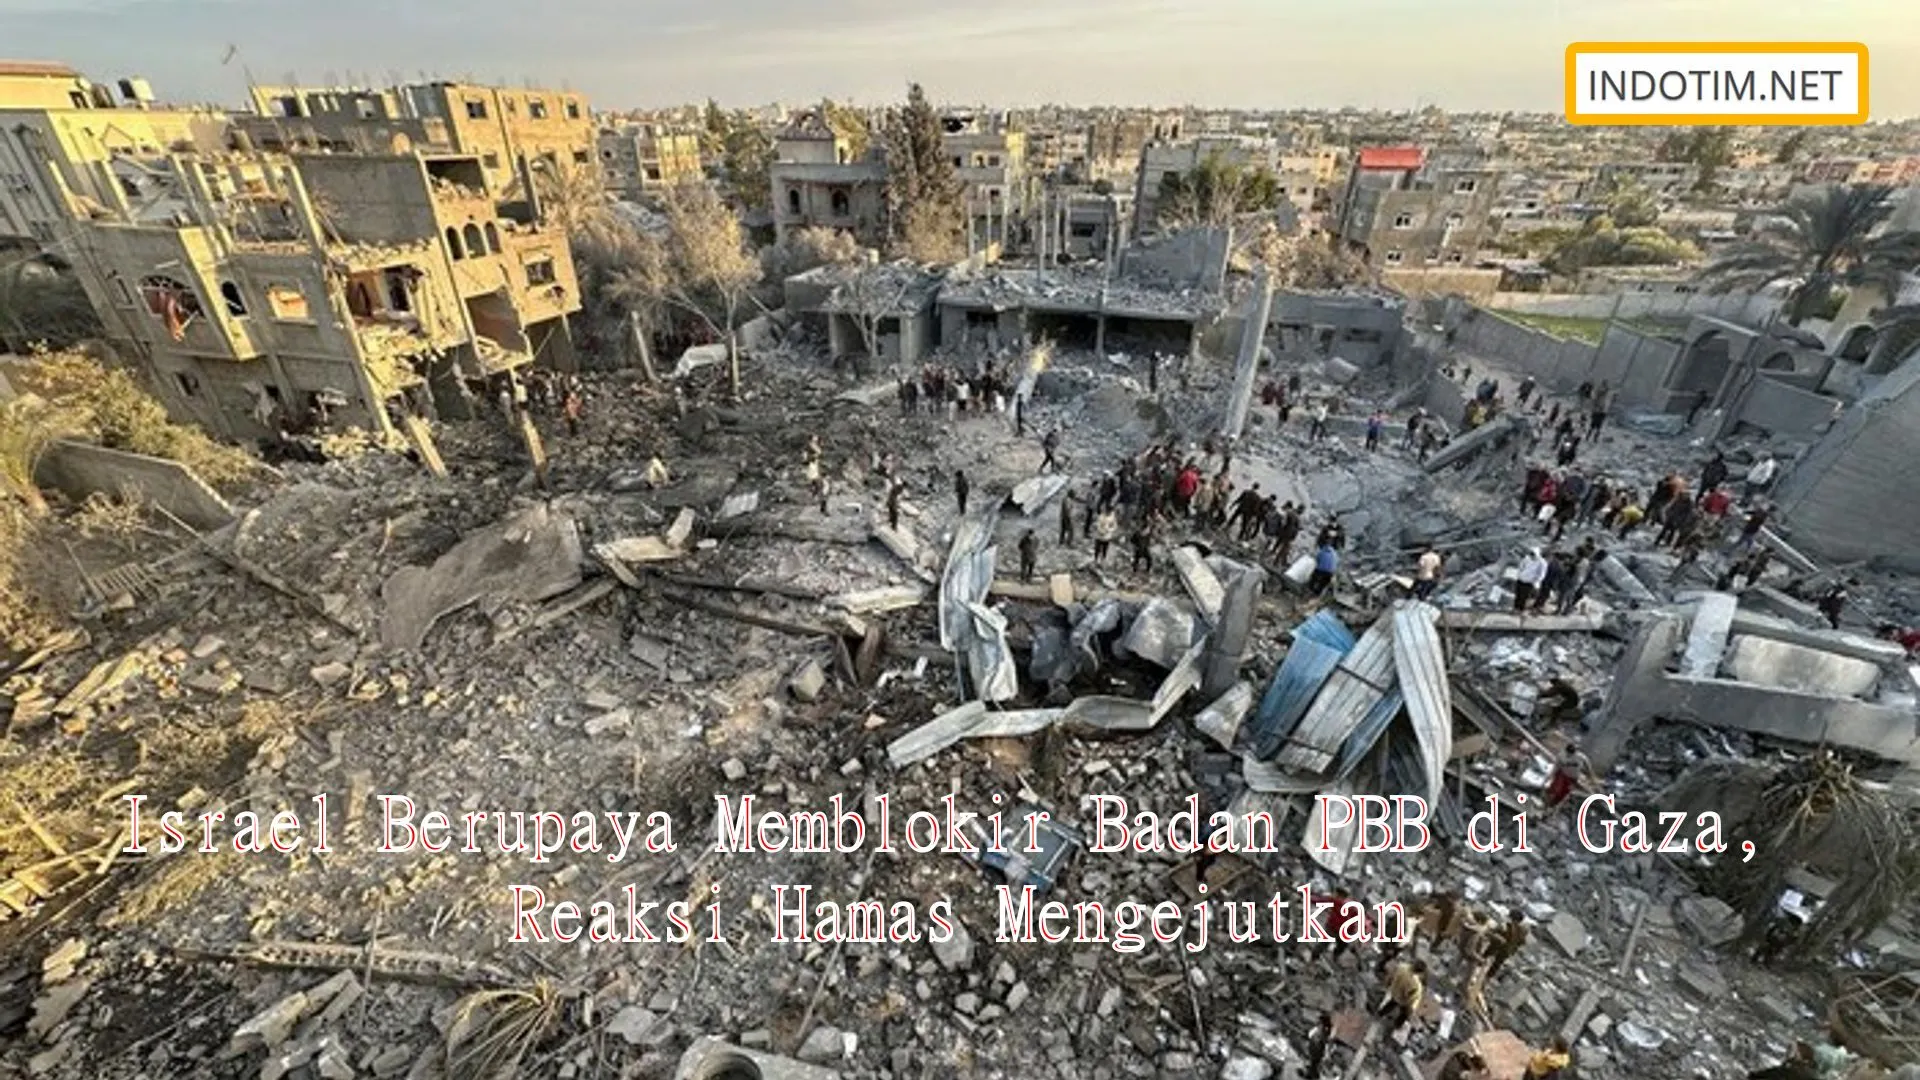 Israel Berupaya Memblokir Badan PBB di Gaza, Reaksi Hamas Mengejutkan